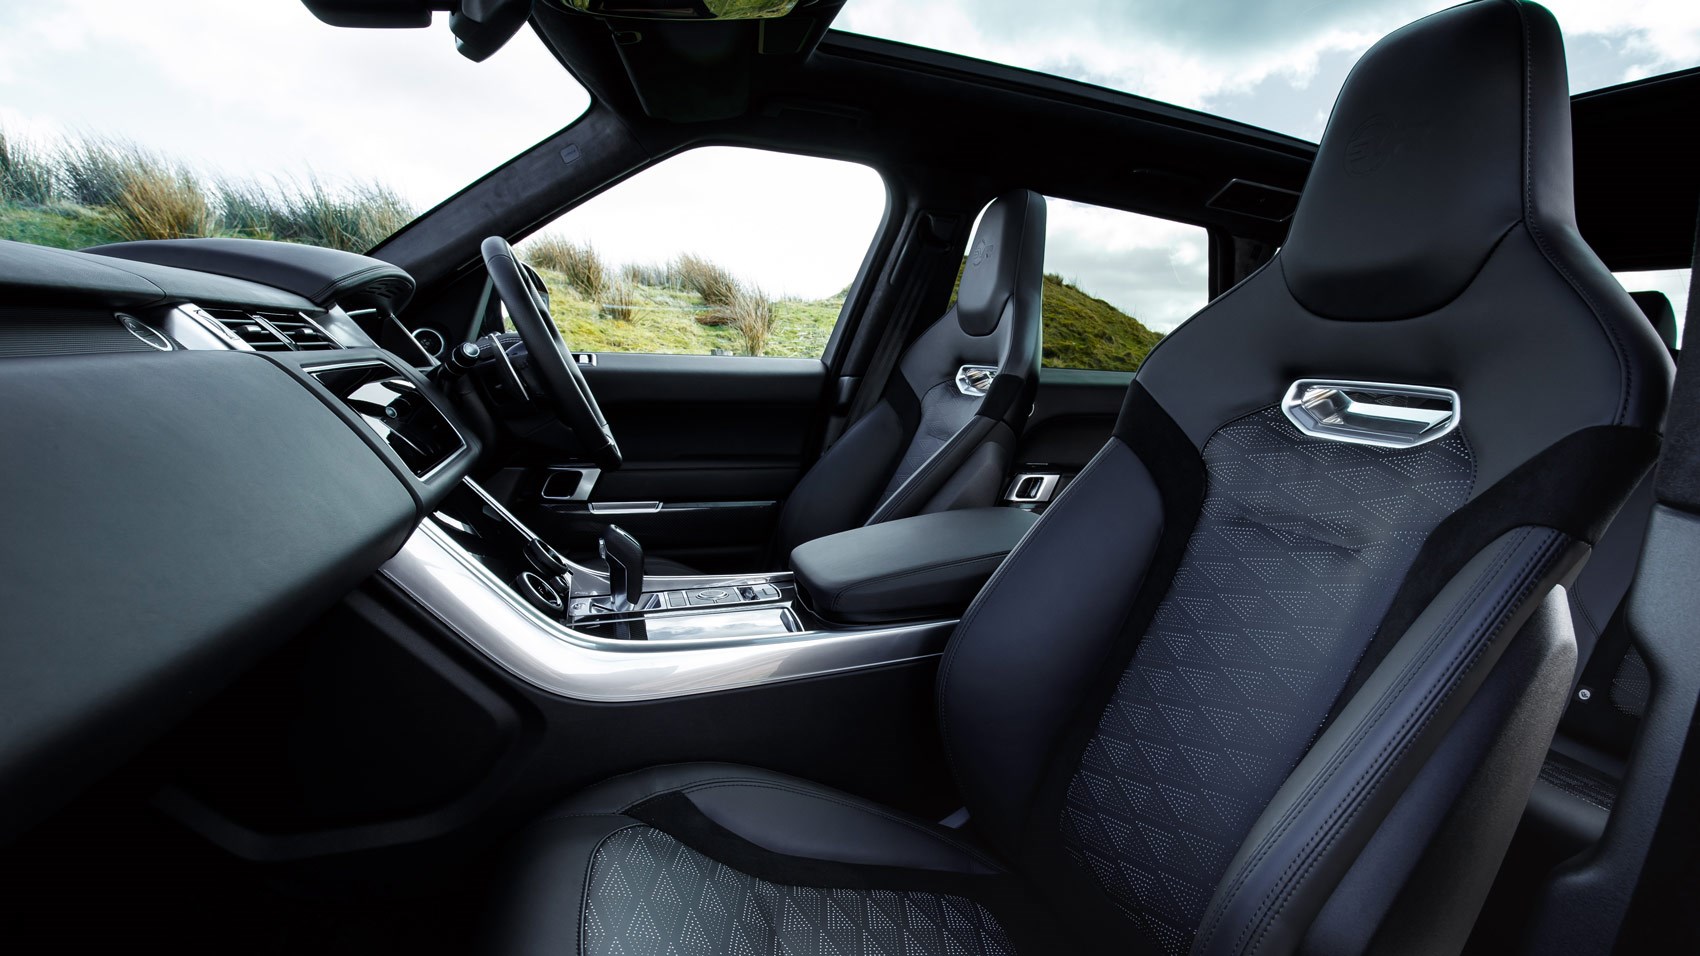 Range Rover Sport SVR 2018 interior